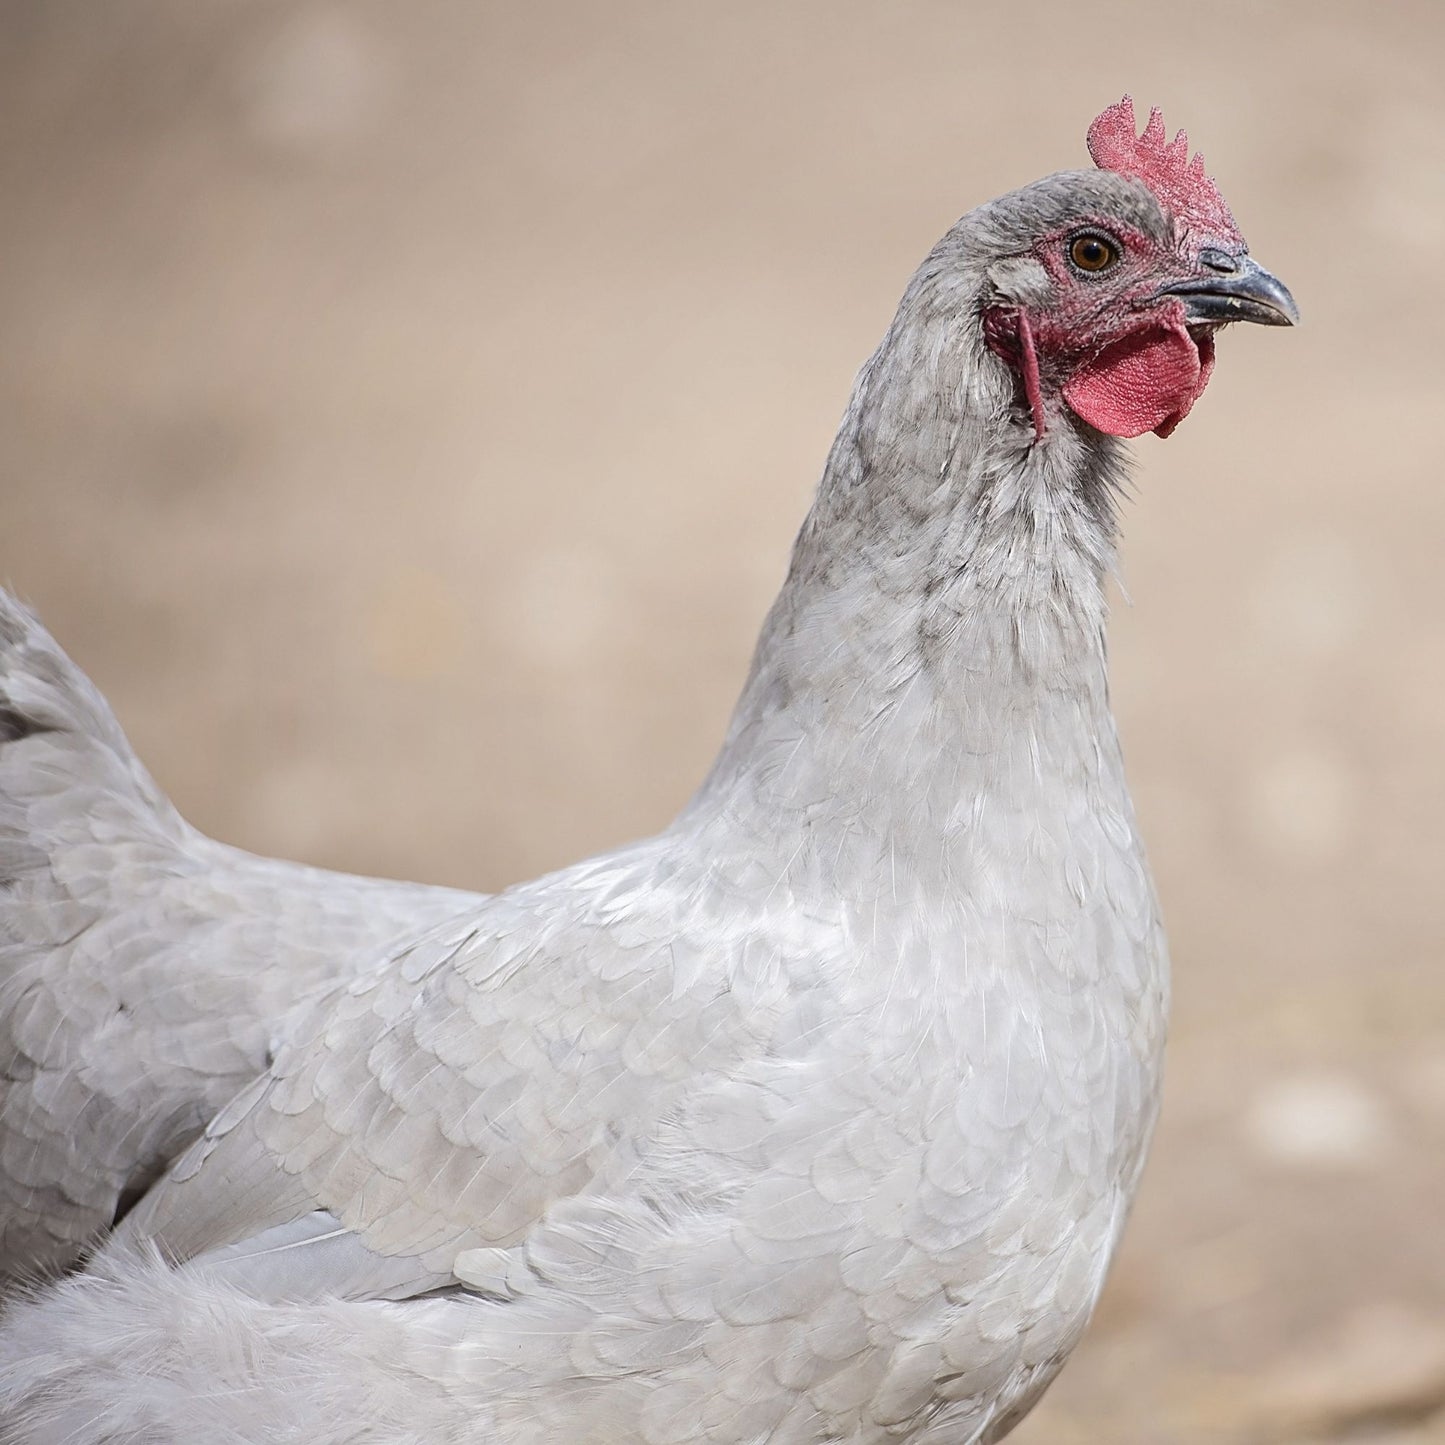 Lavender Orpington chicken breed